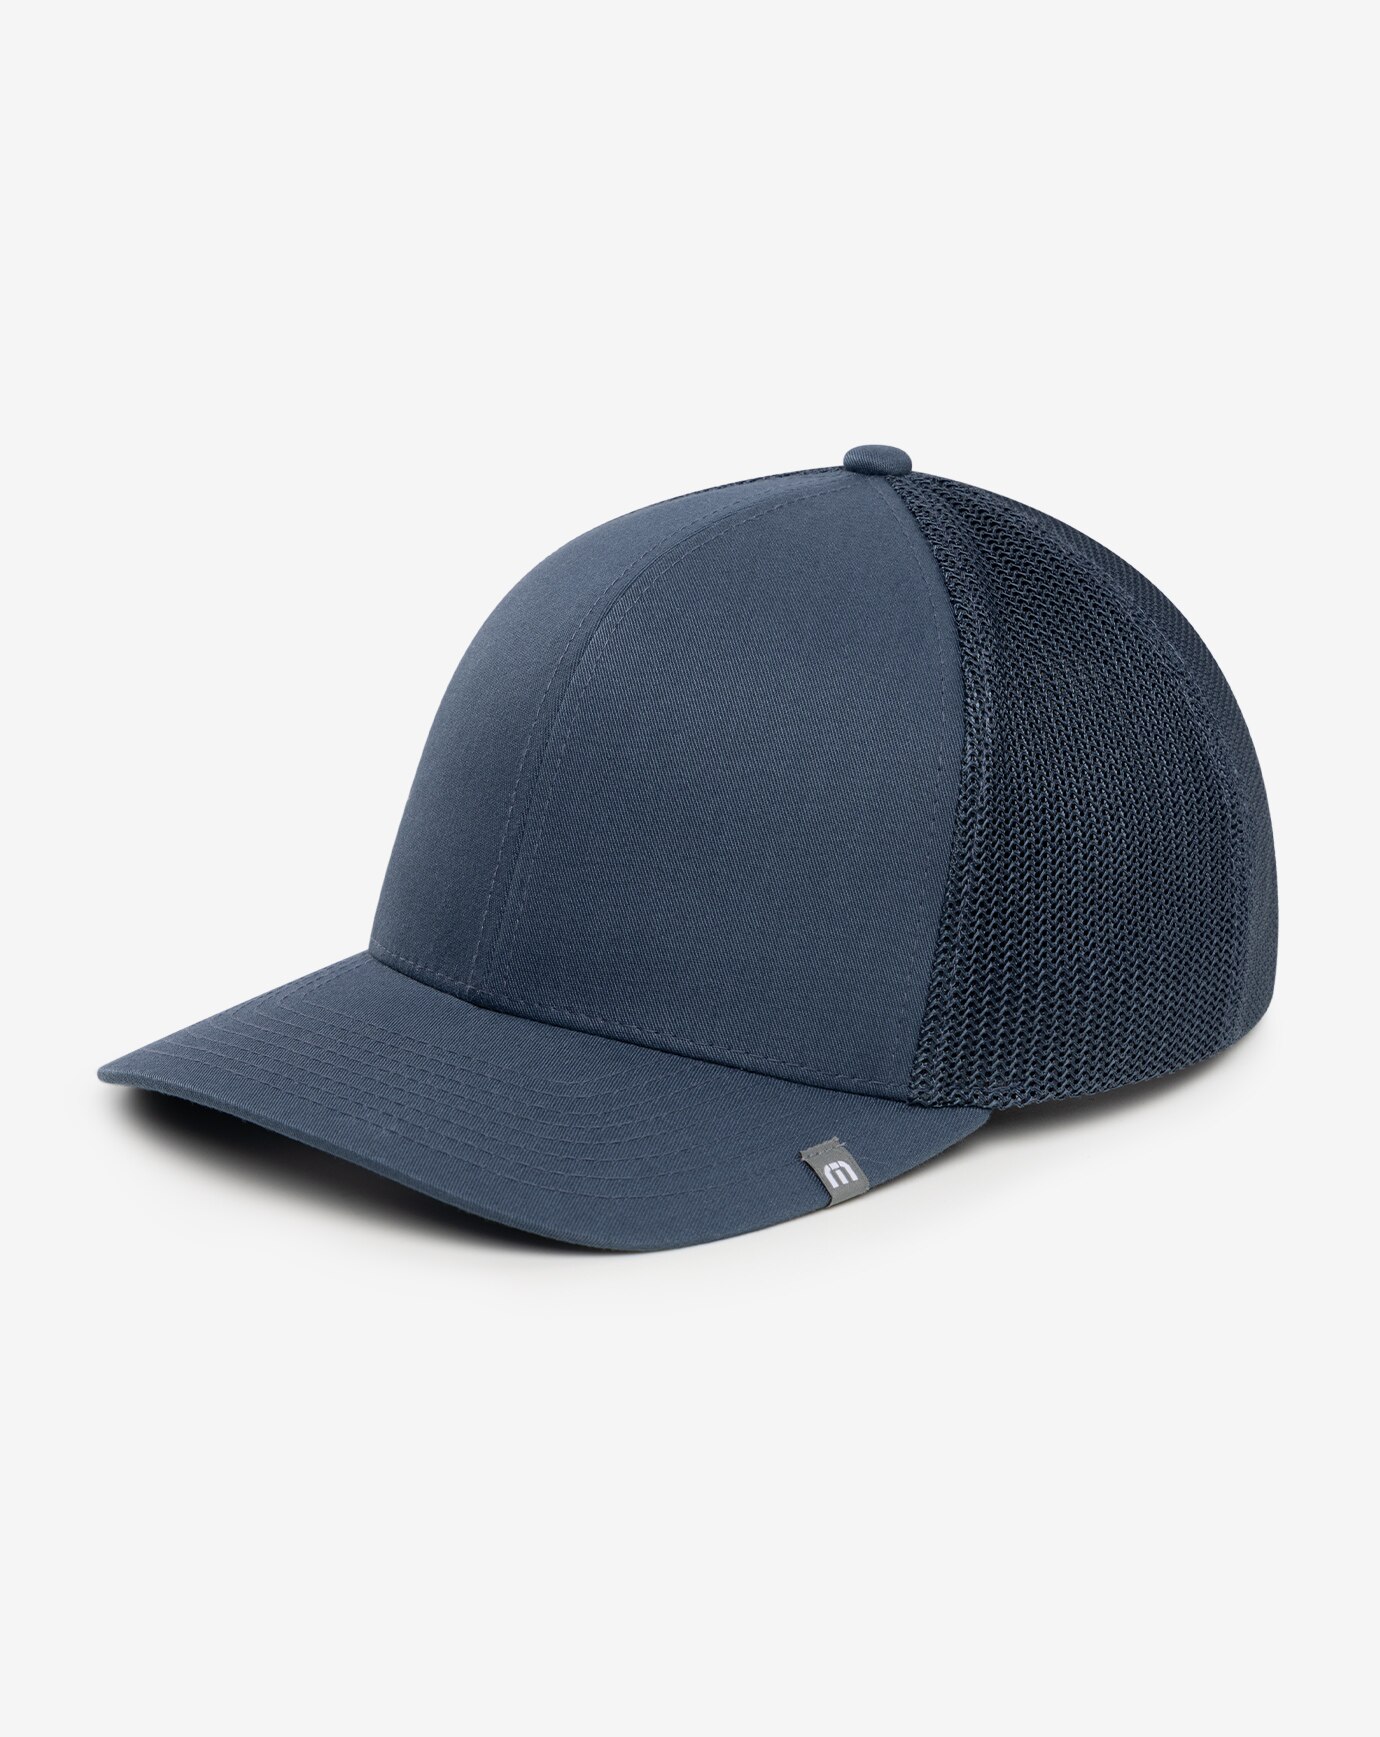 Snapback Hats, Caps & Performance Headwear